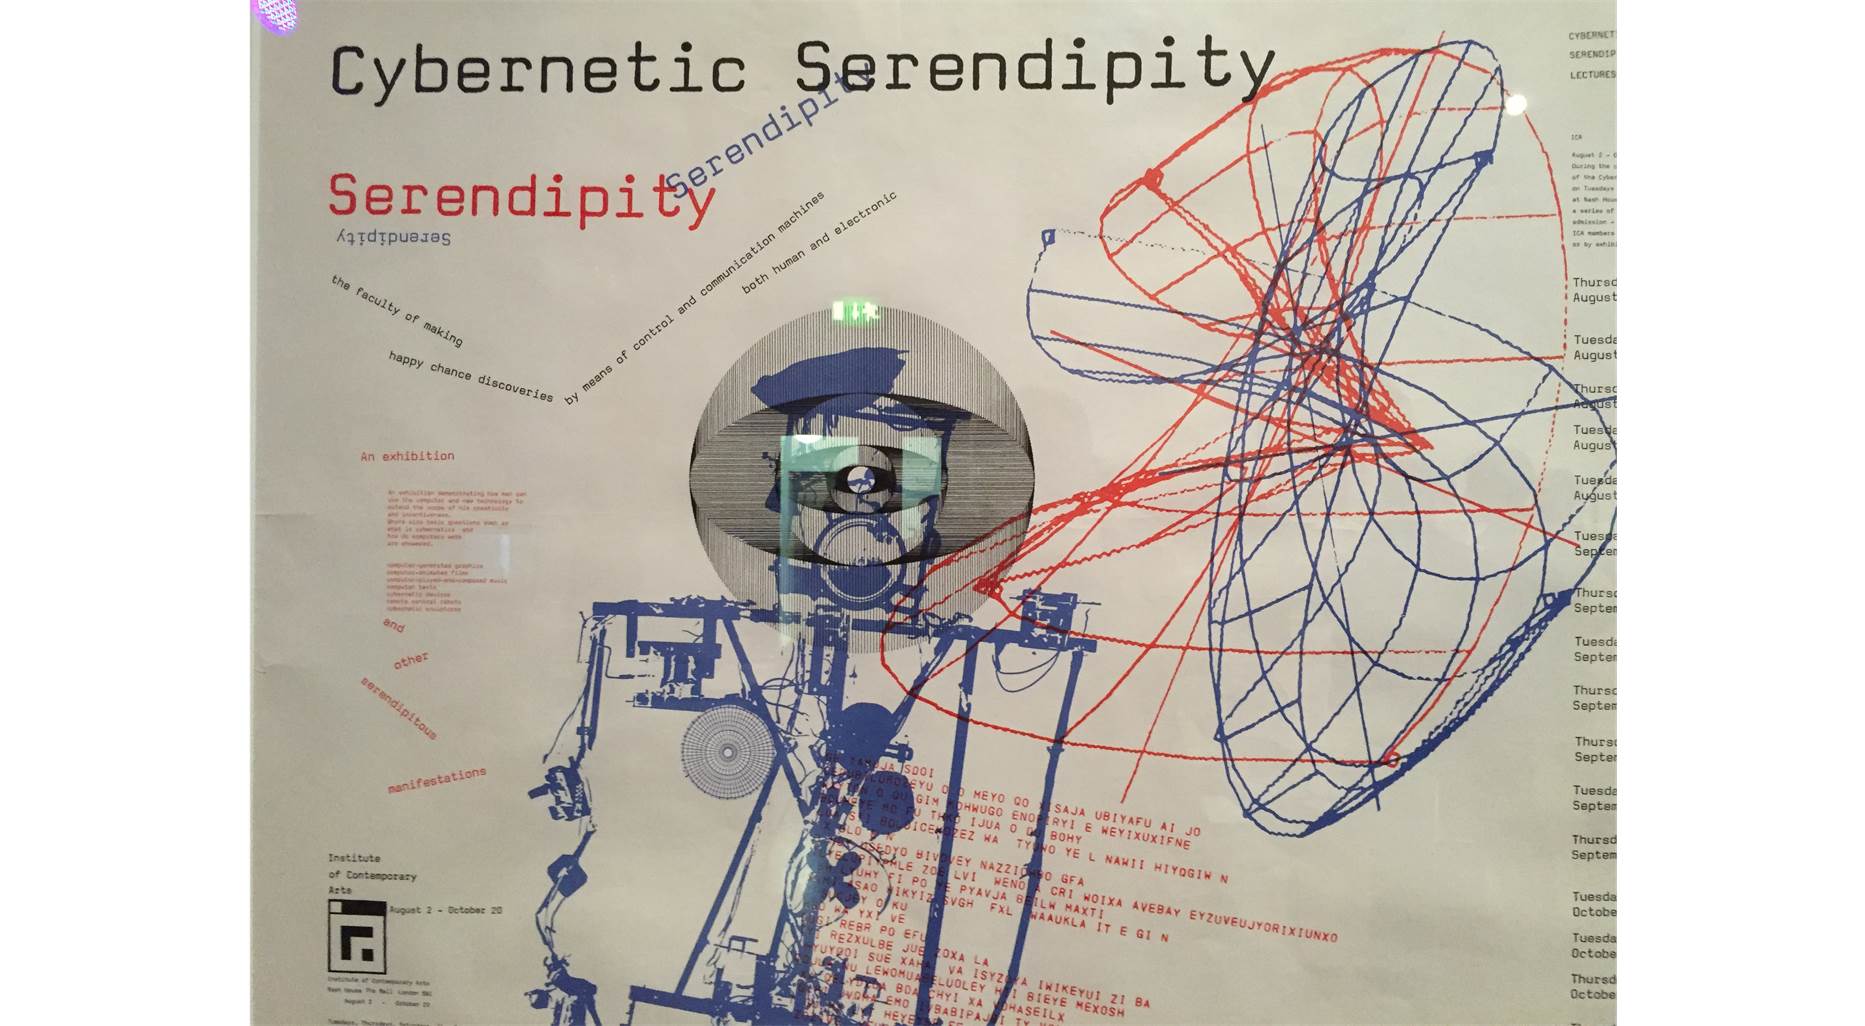 Cybernetic serendibity